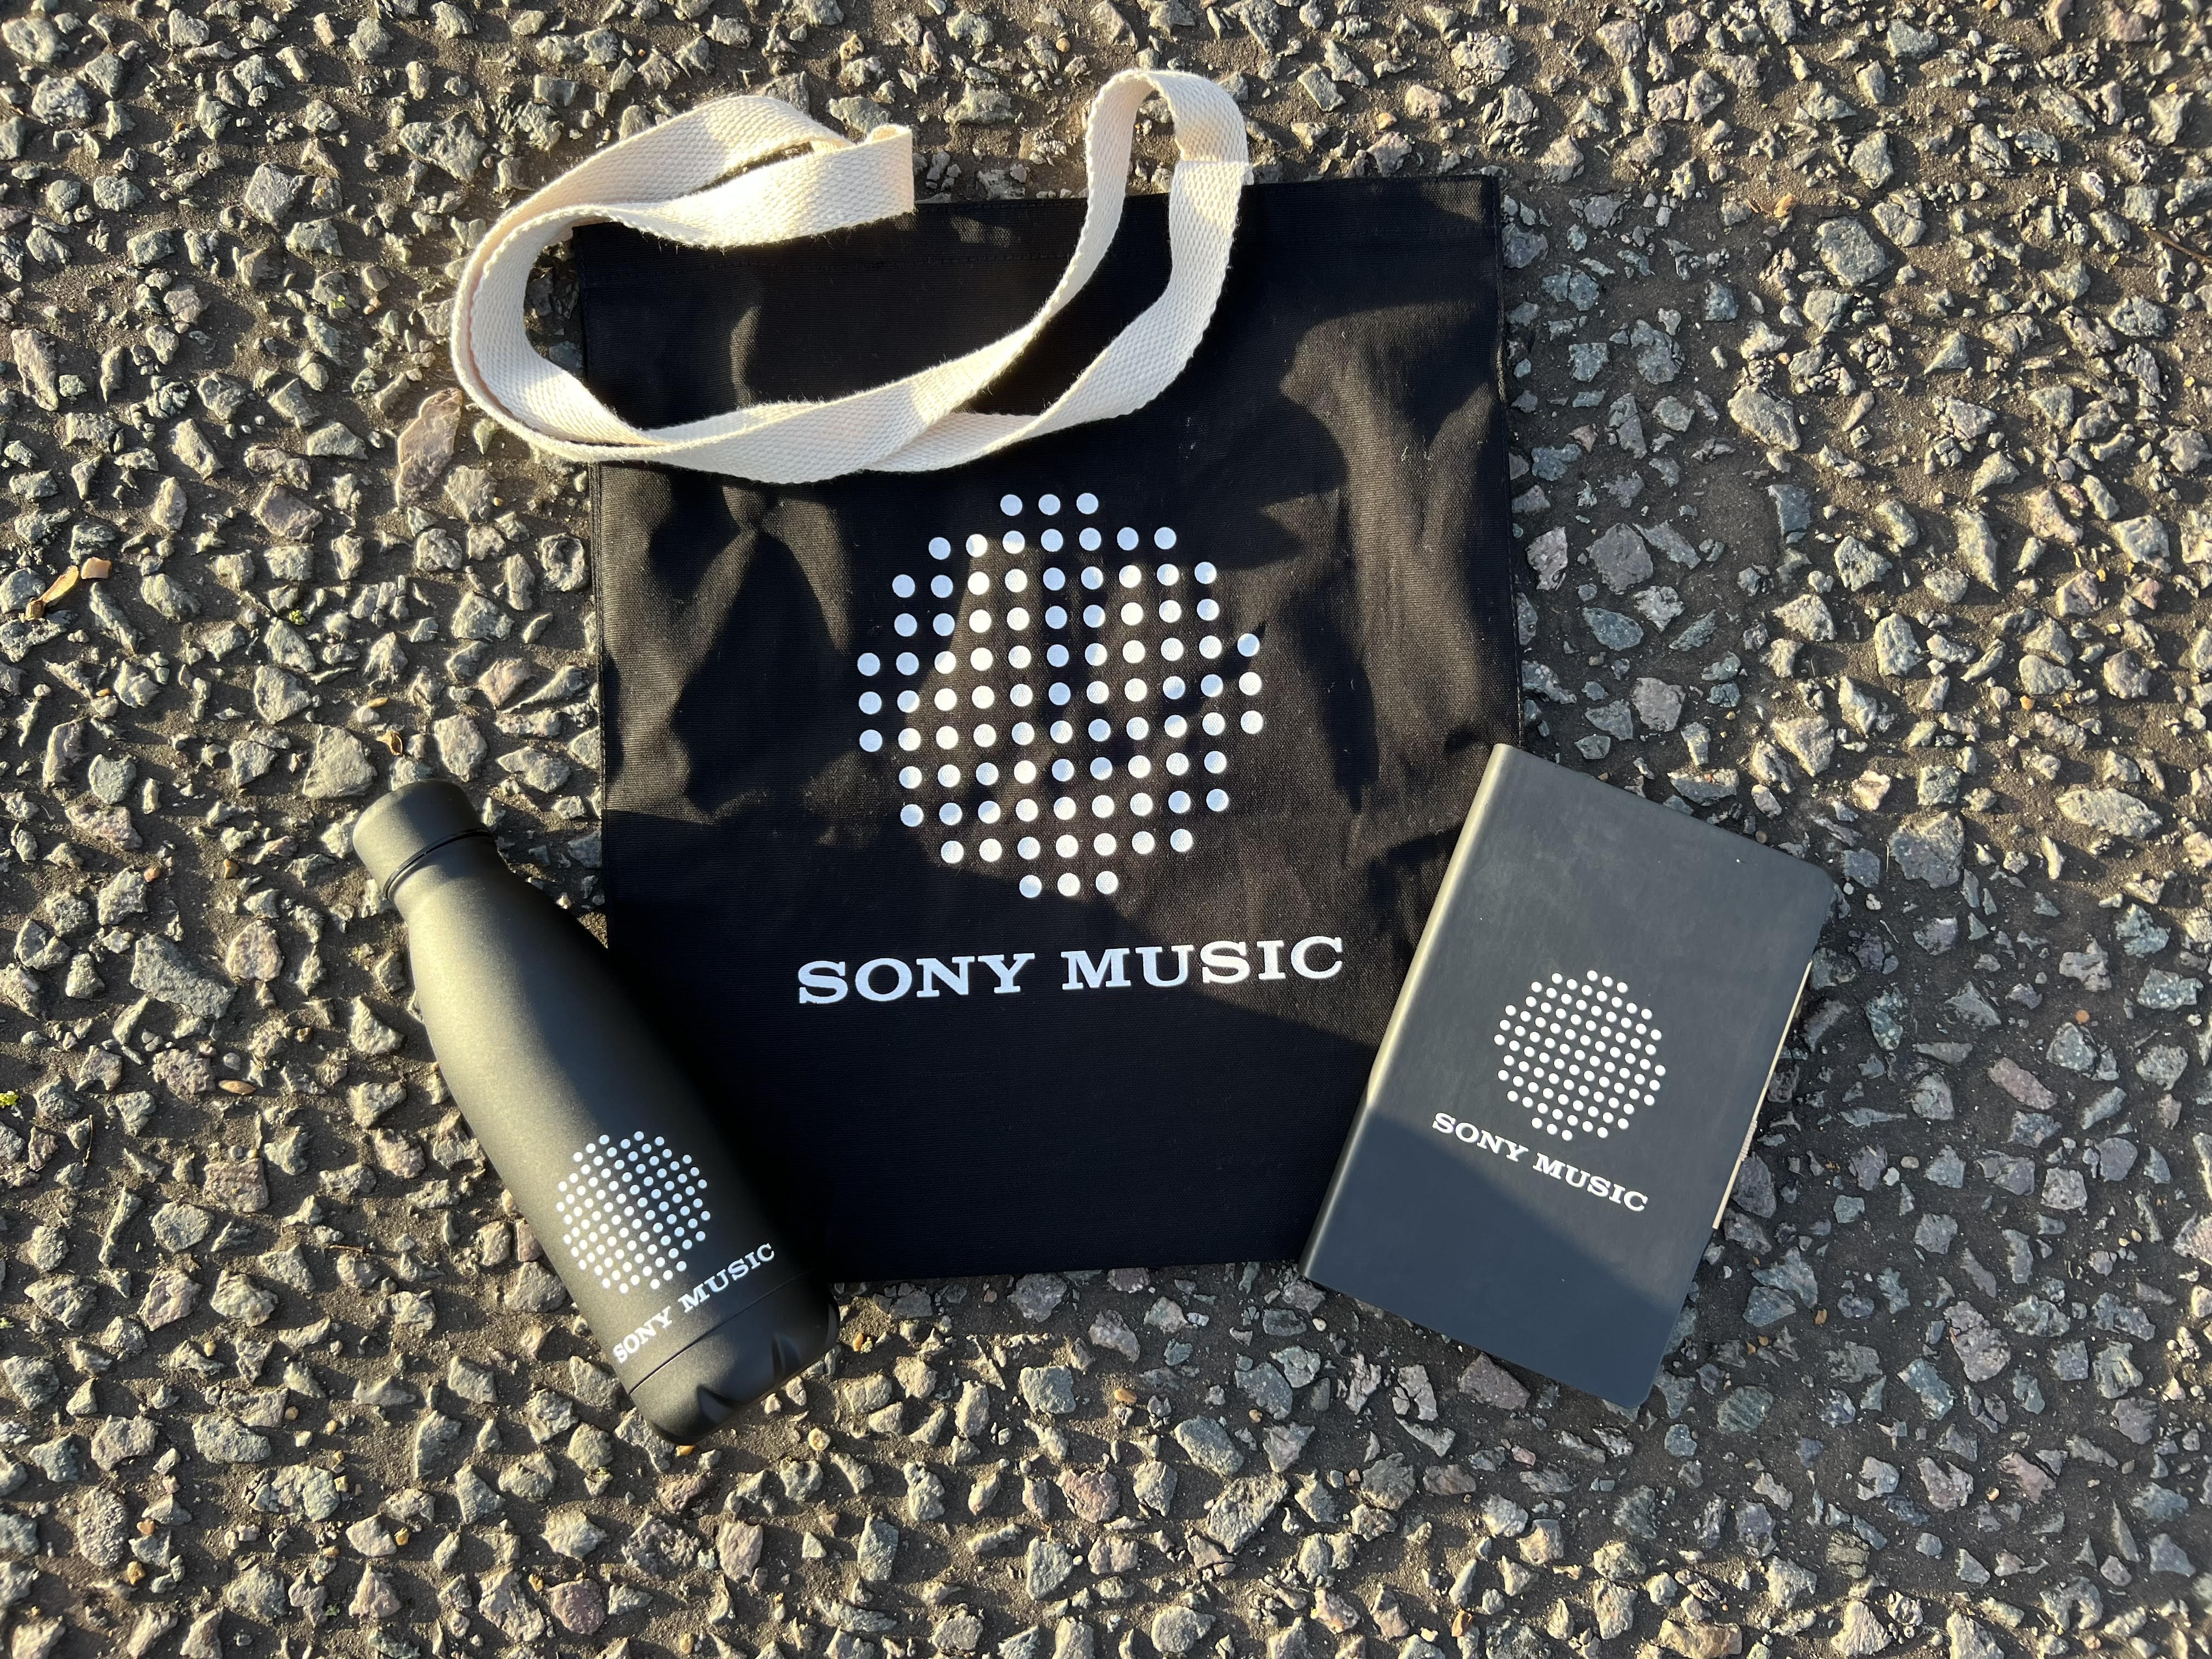 Sony Music Branded Merchandise